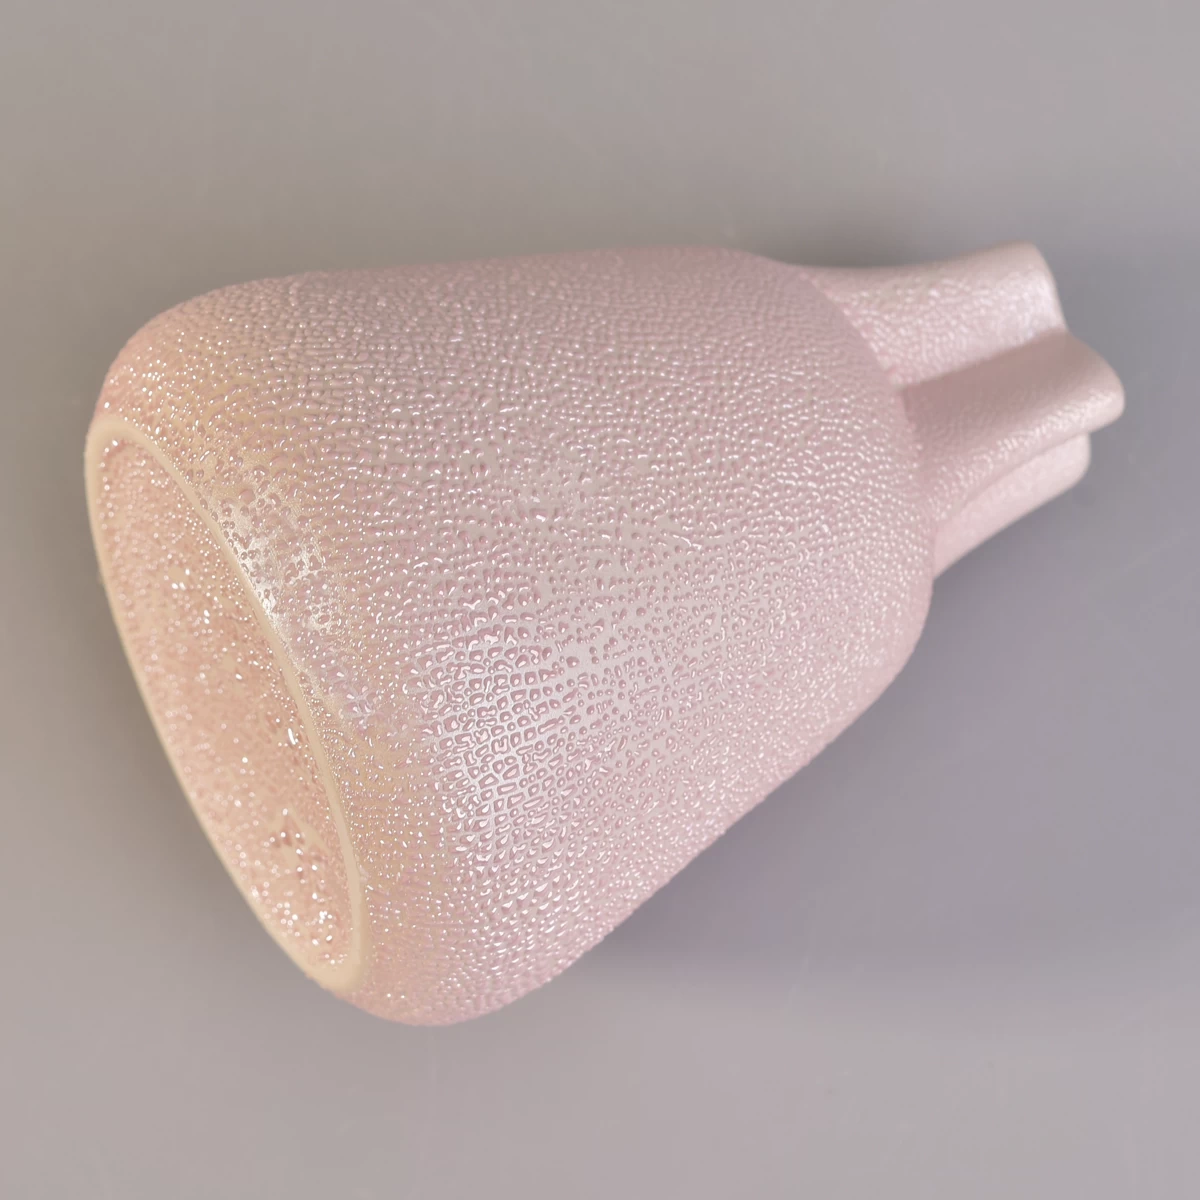 Sunny Glassware designed ceramic diffuser bottle 